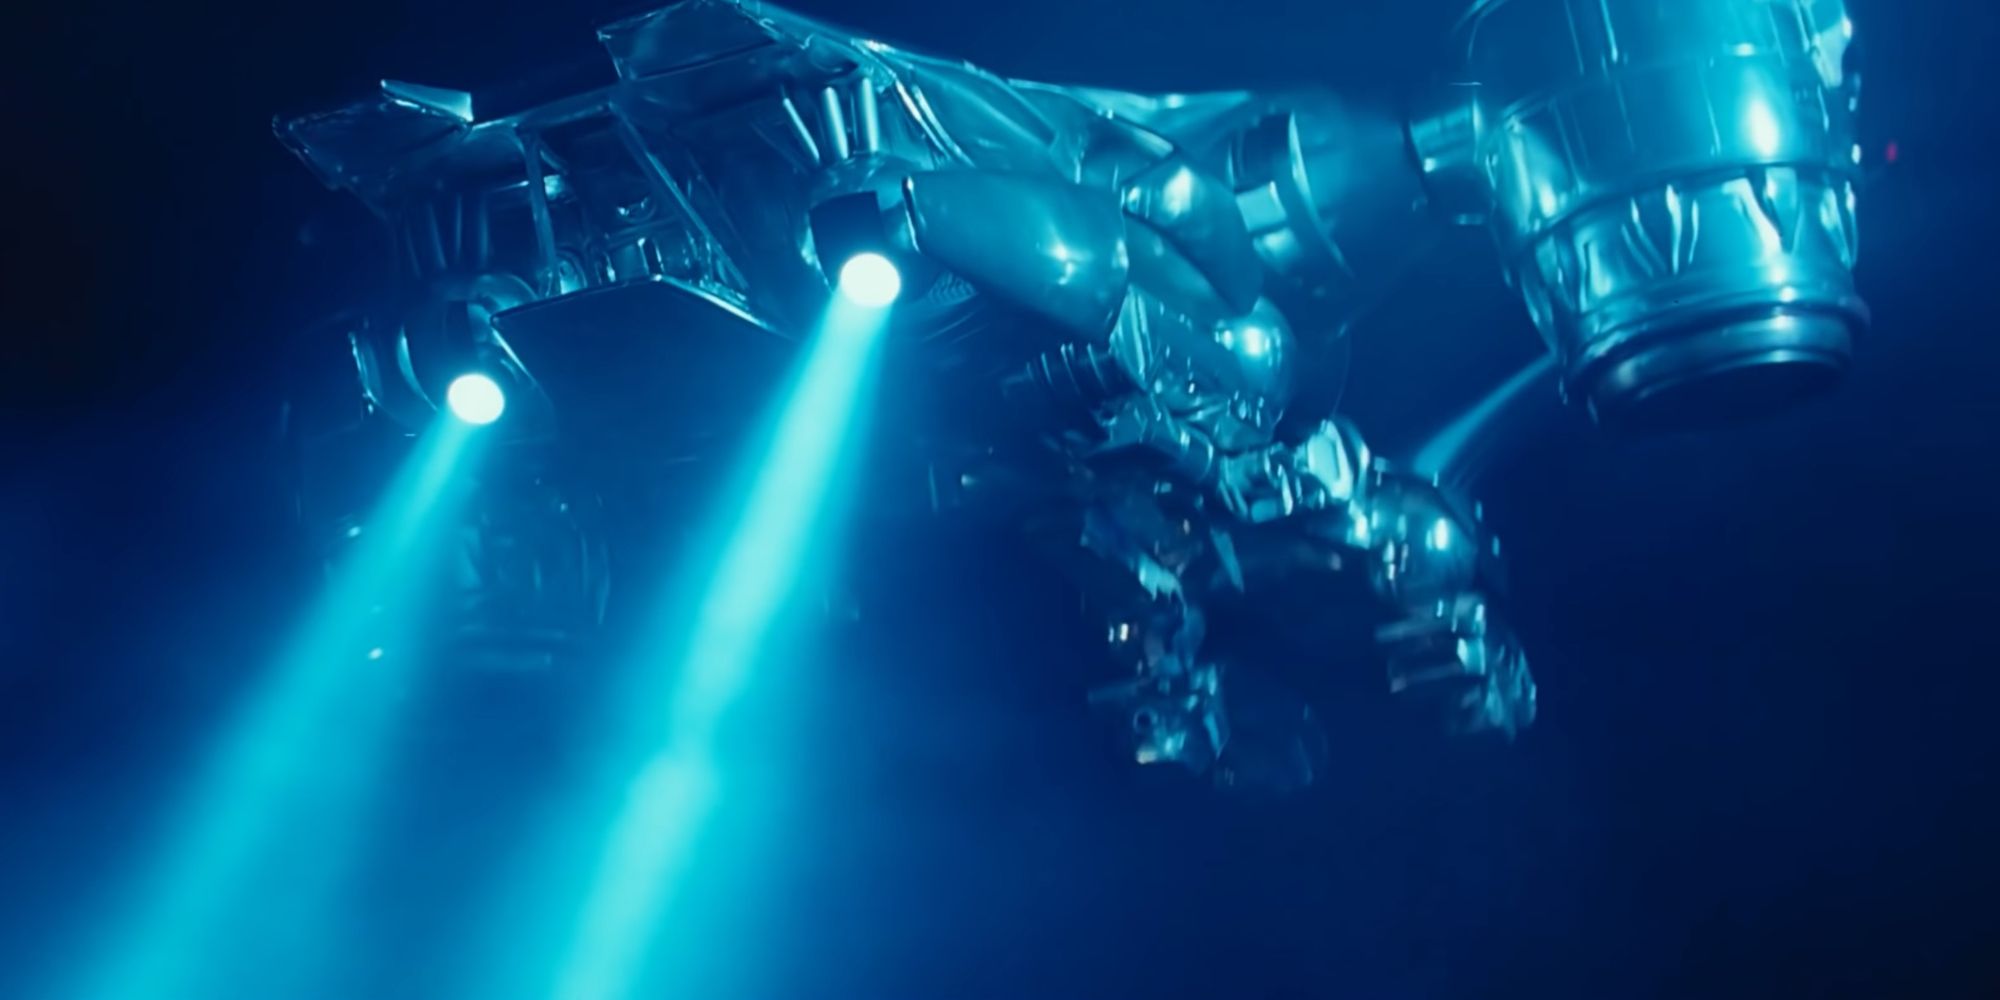 Hunter Killer soaring through the night sky in Terminator 2 Judgment Day